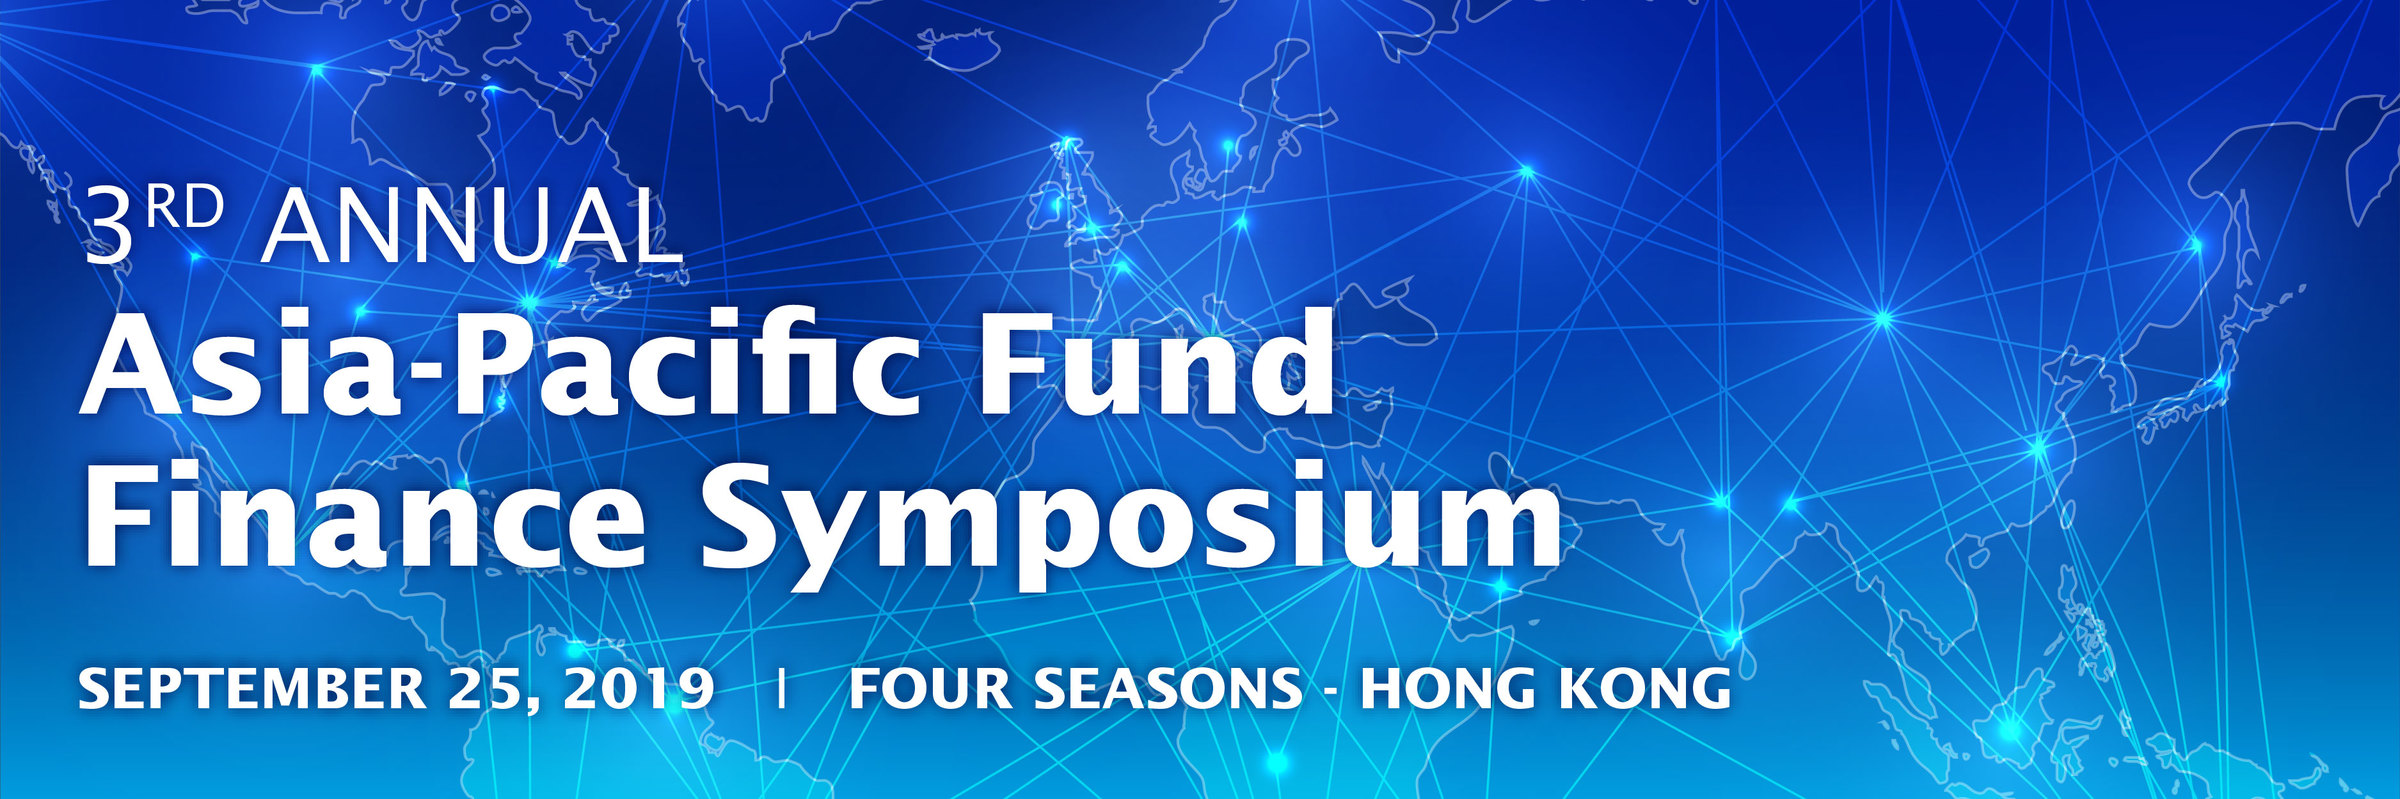 2019 Asia-Pacific Fund Finance Symposium